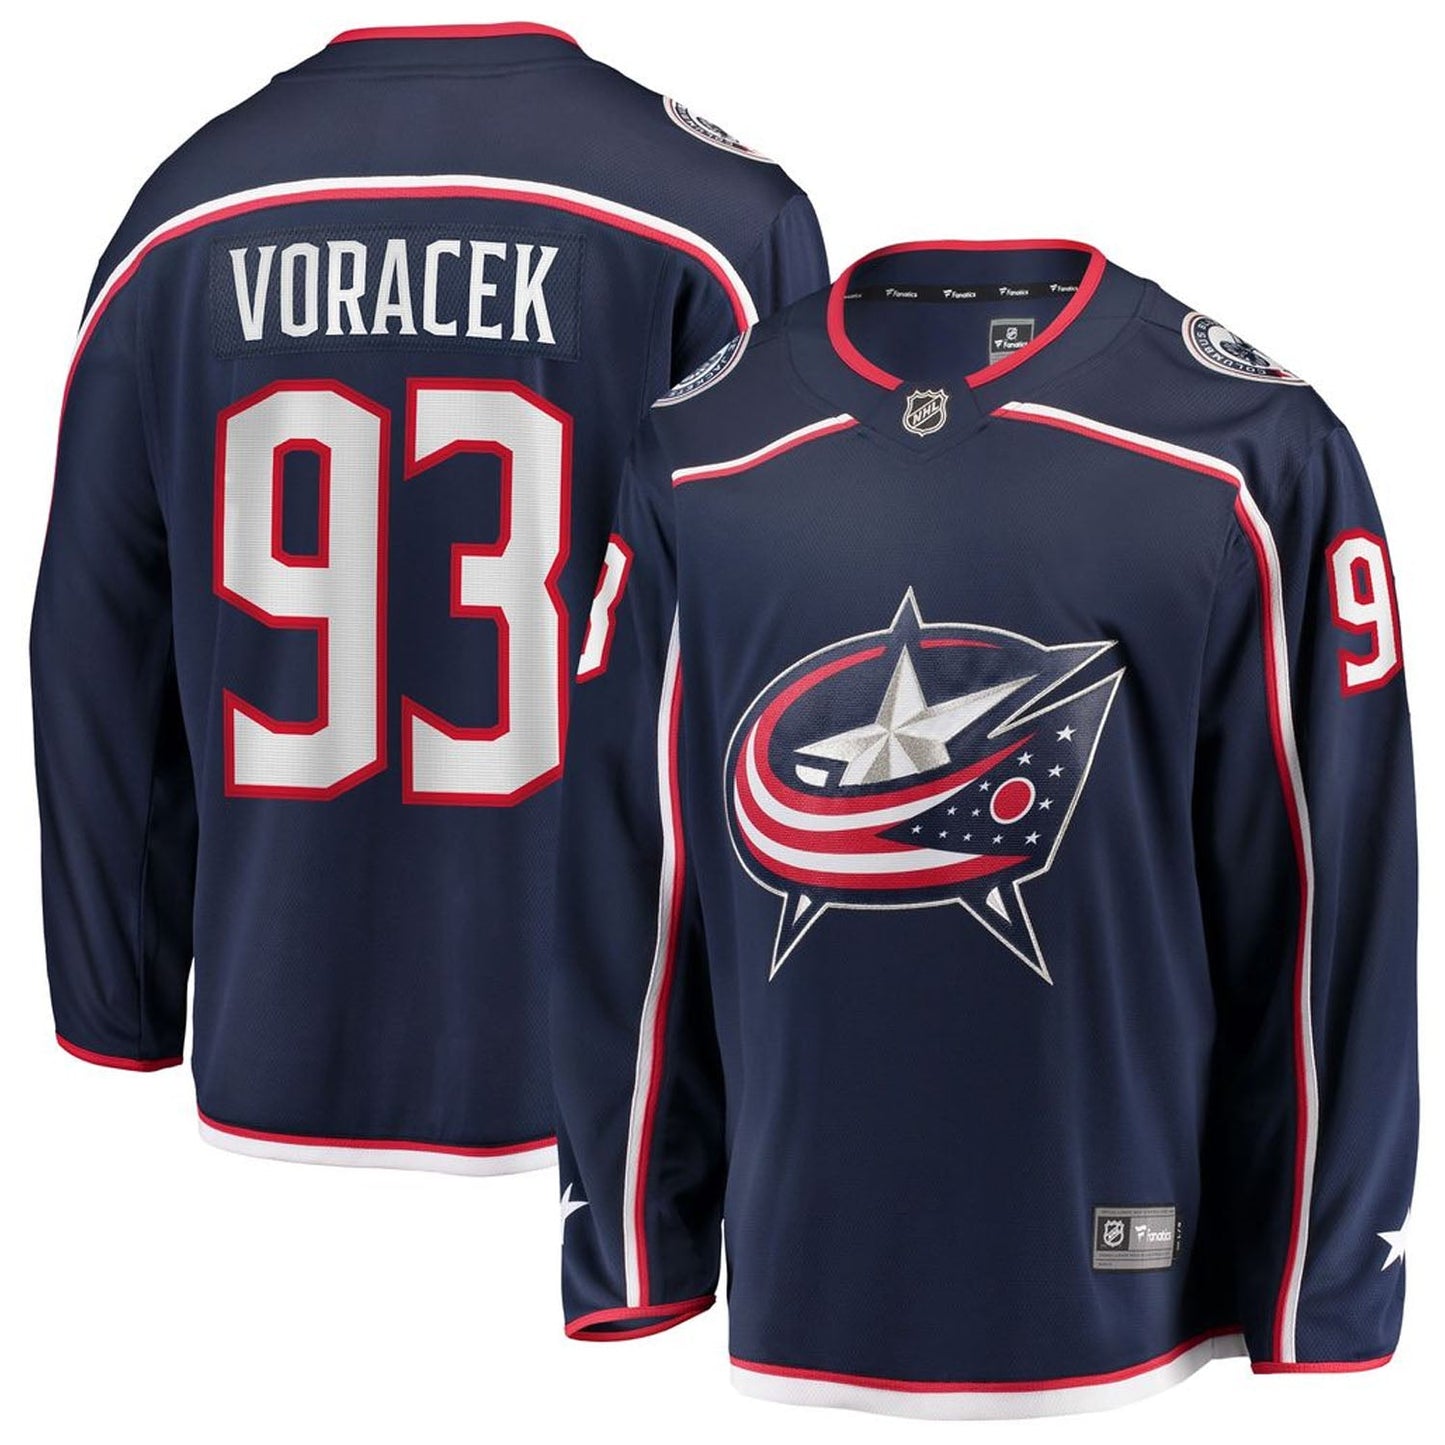 NHL Jakub Voracek Columbus Blue Jackets 93 Jersey